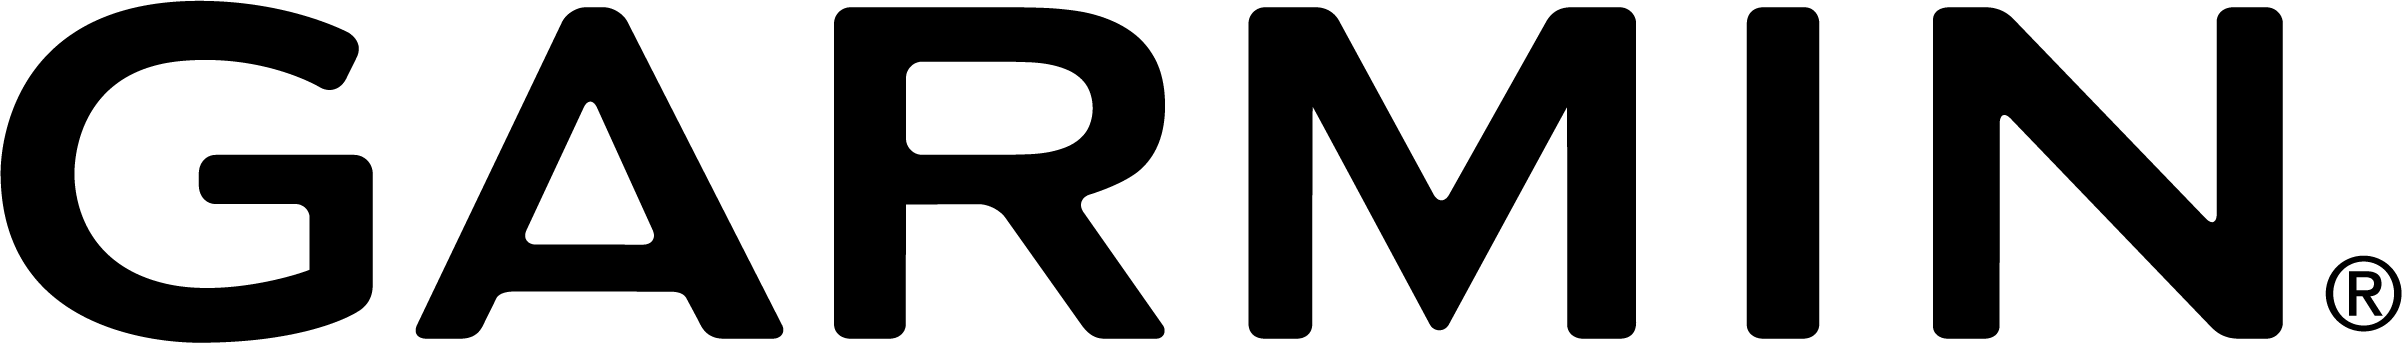 Logo_Garmin